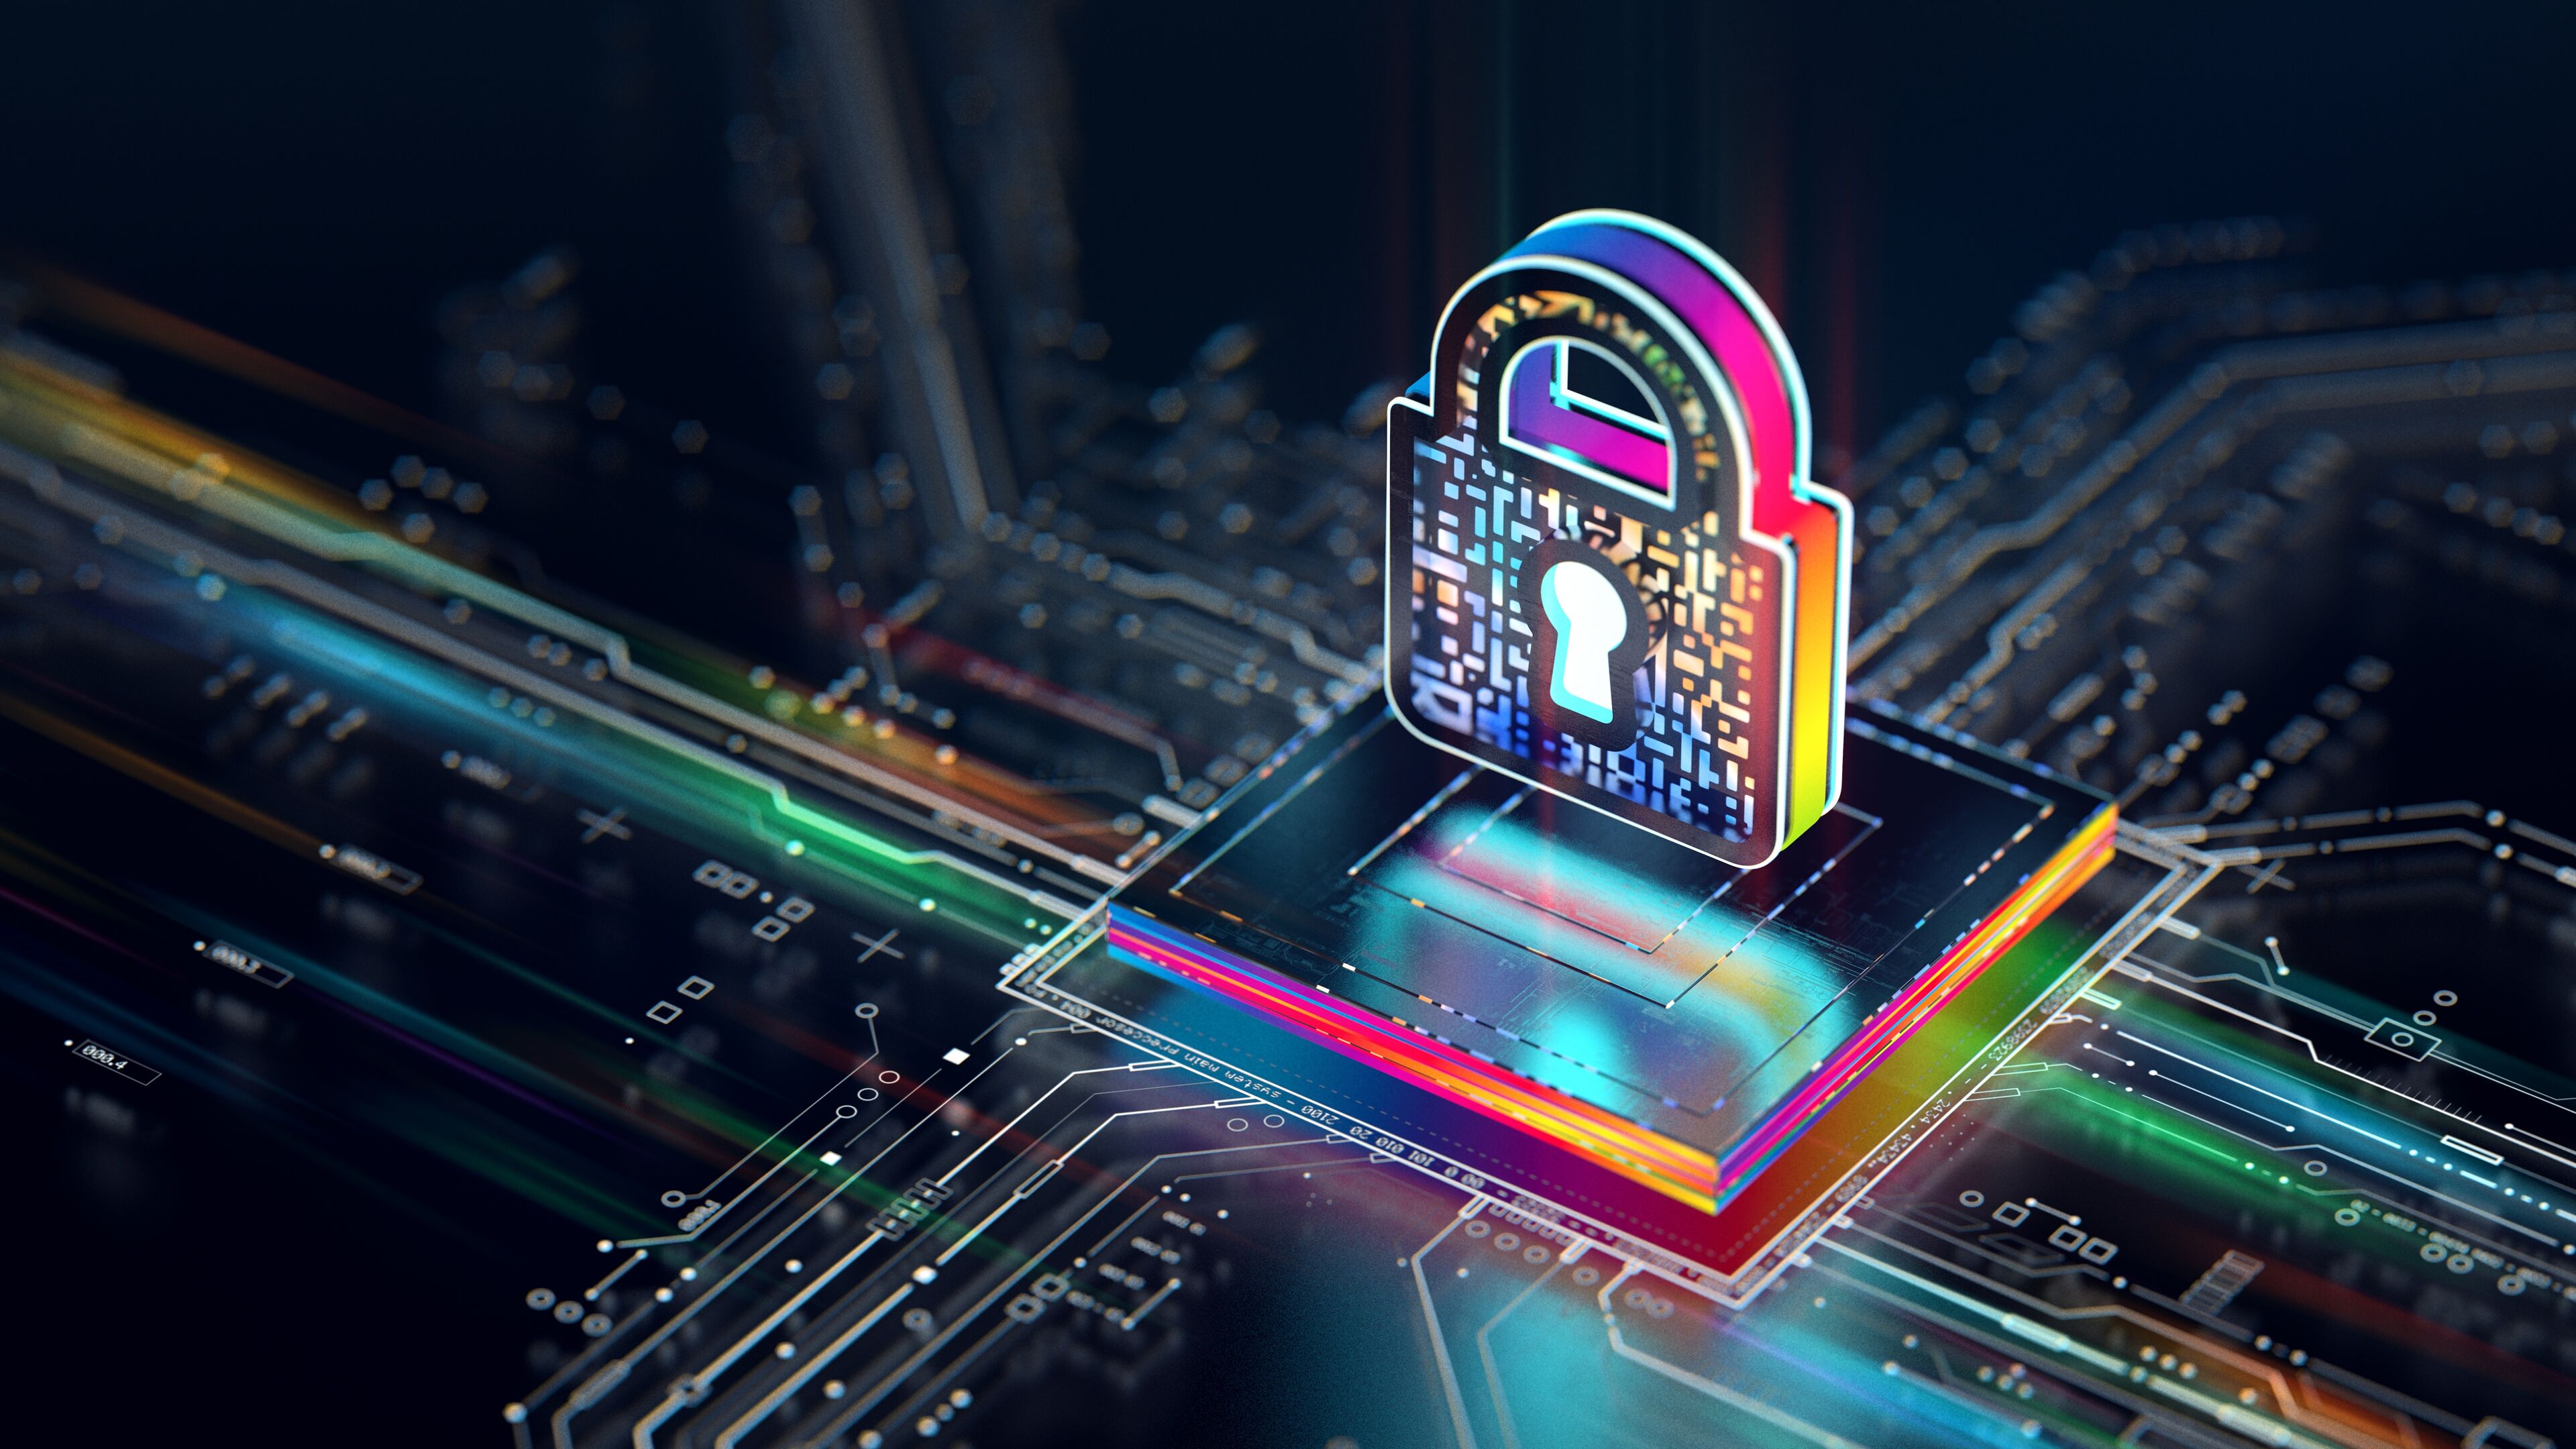 A neon-lit padlock symbol on a microchip, representing digital security.